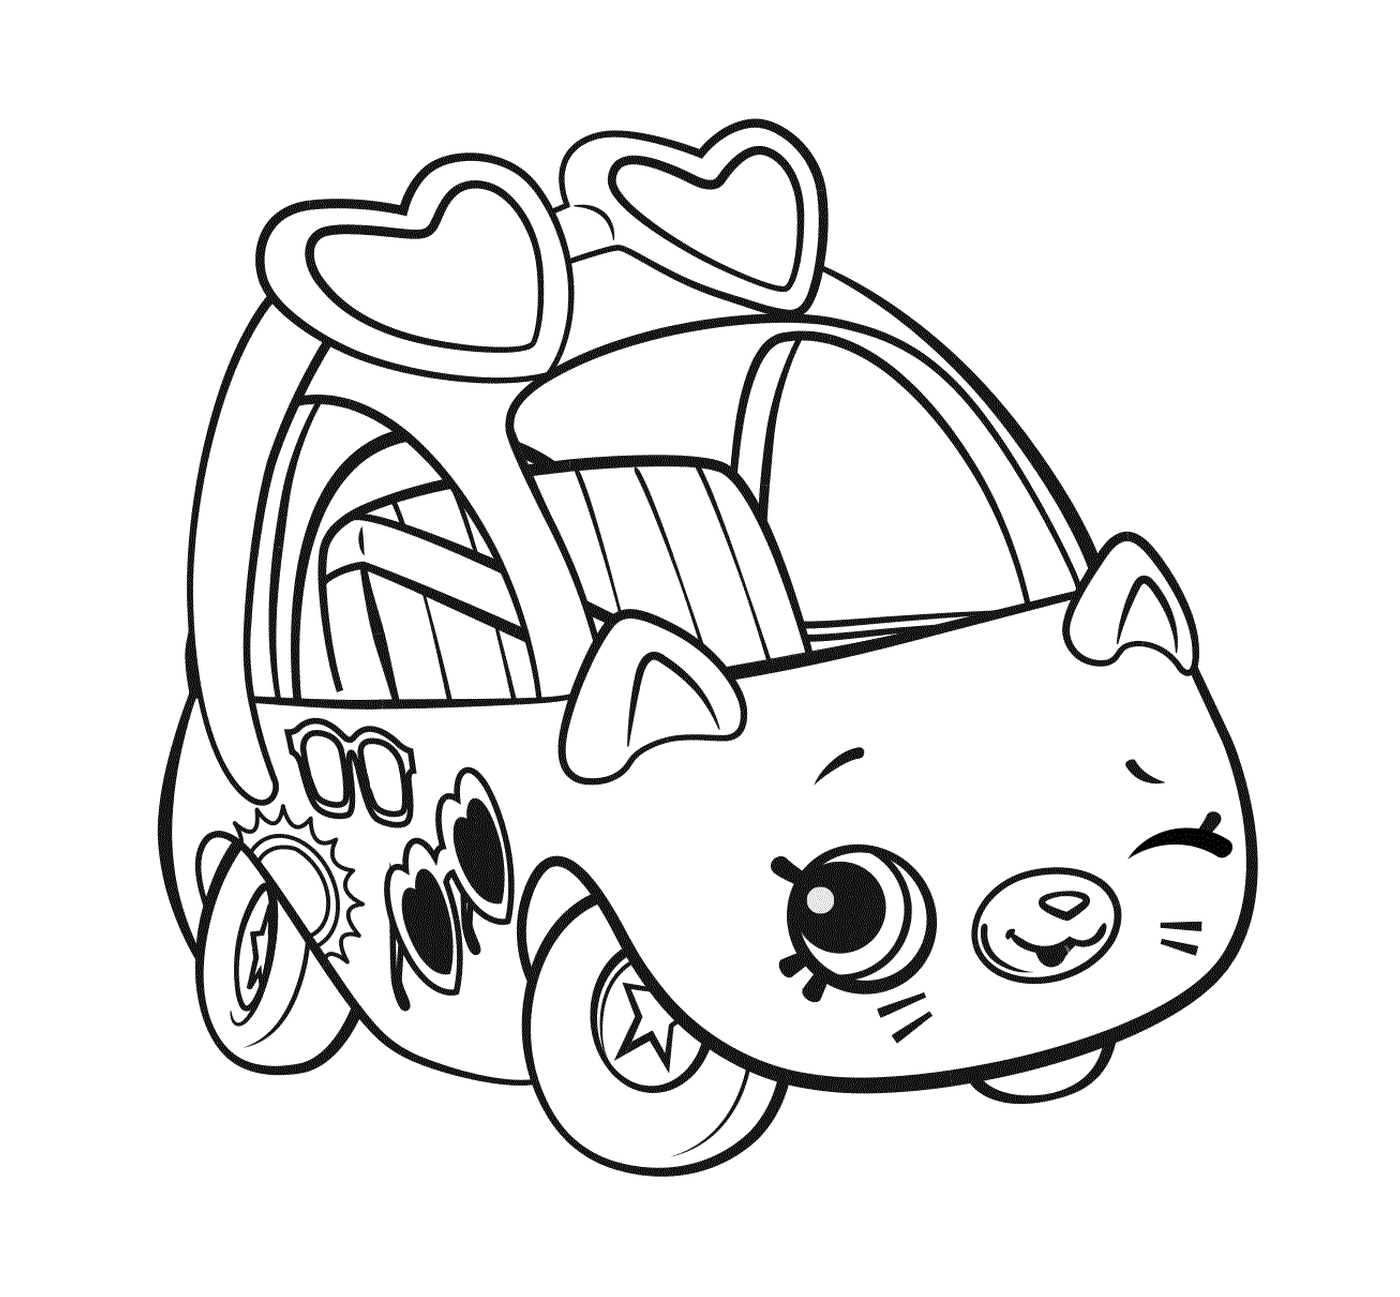  《阳光轿车》,Cutie Cars Shoppkins 作者:Cutie Cars Shoppkins 